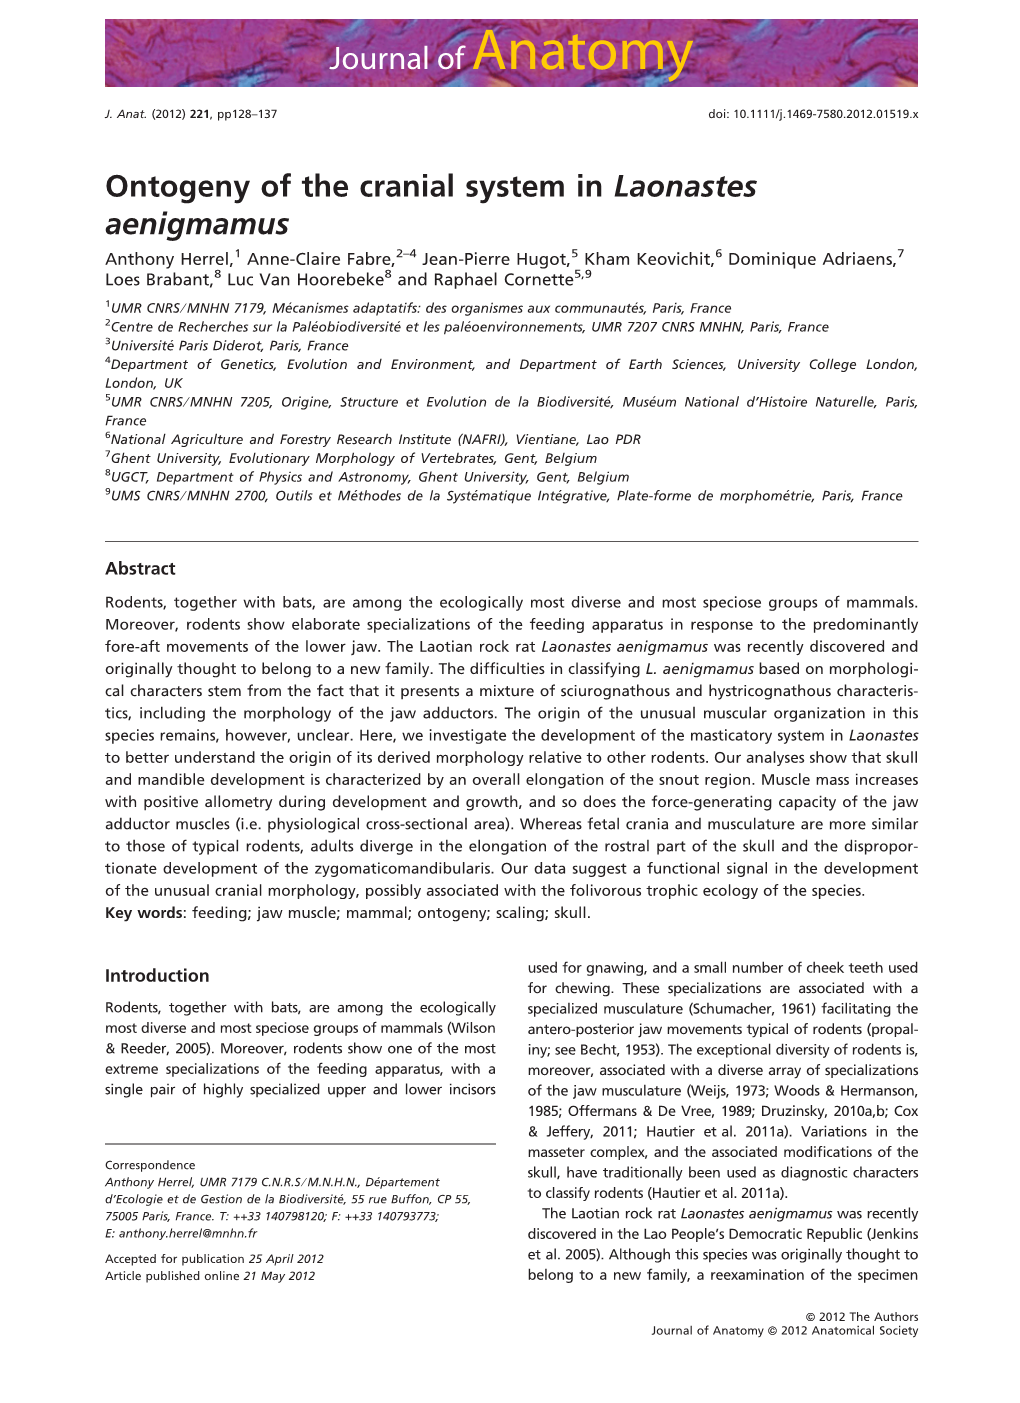 Ontogeny of the Cranial System in Laonastes Aenigmamus